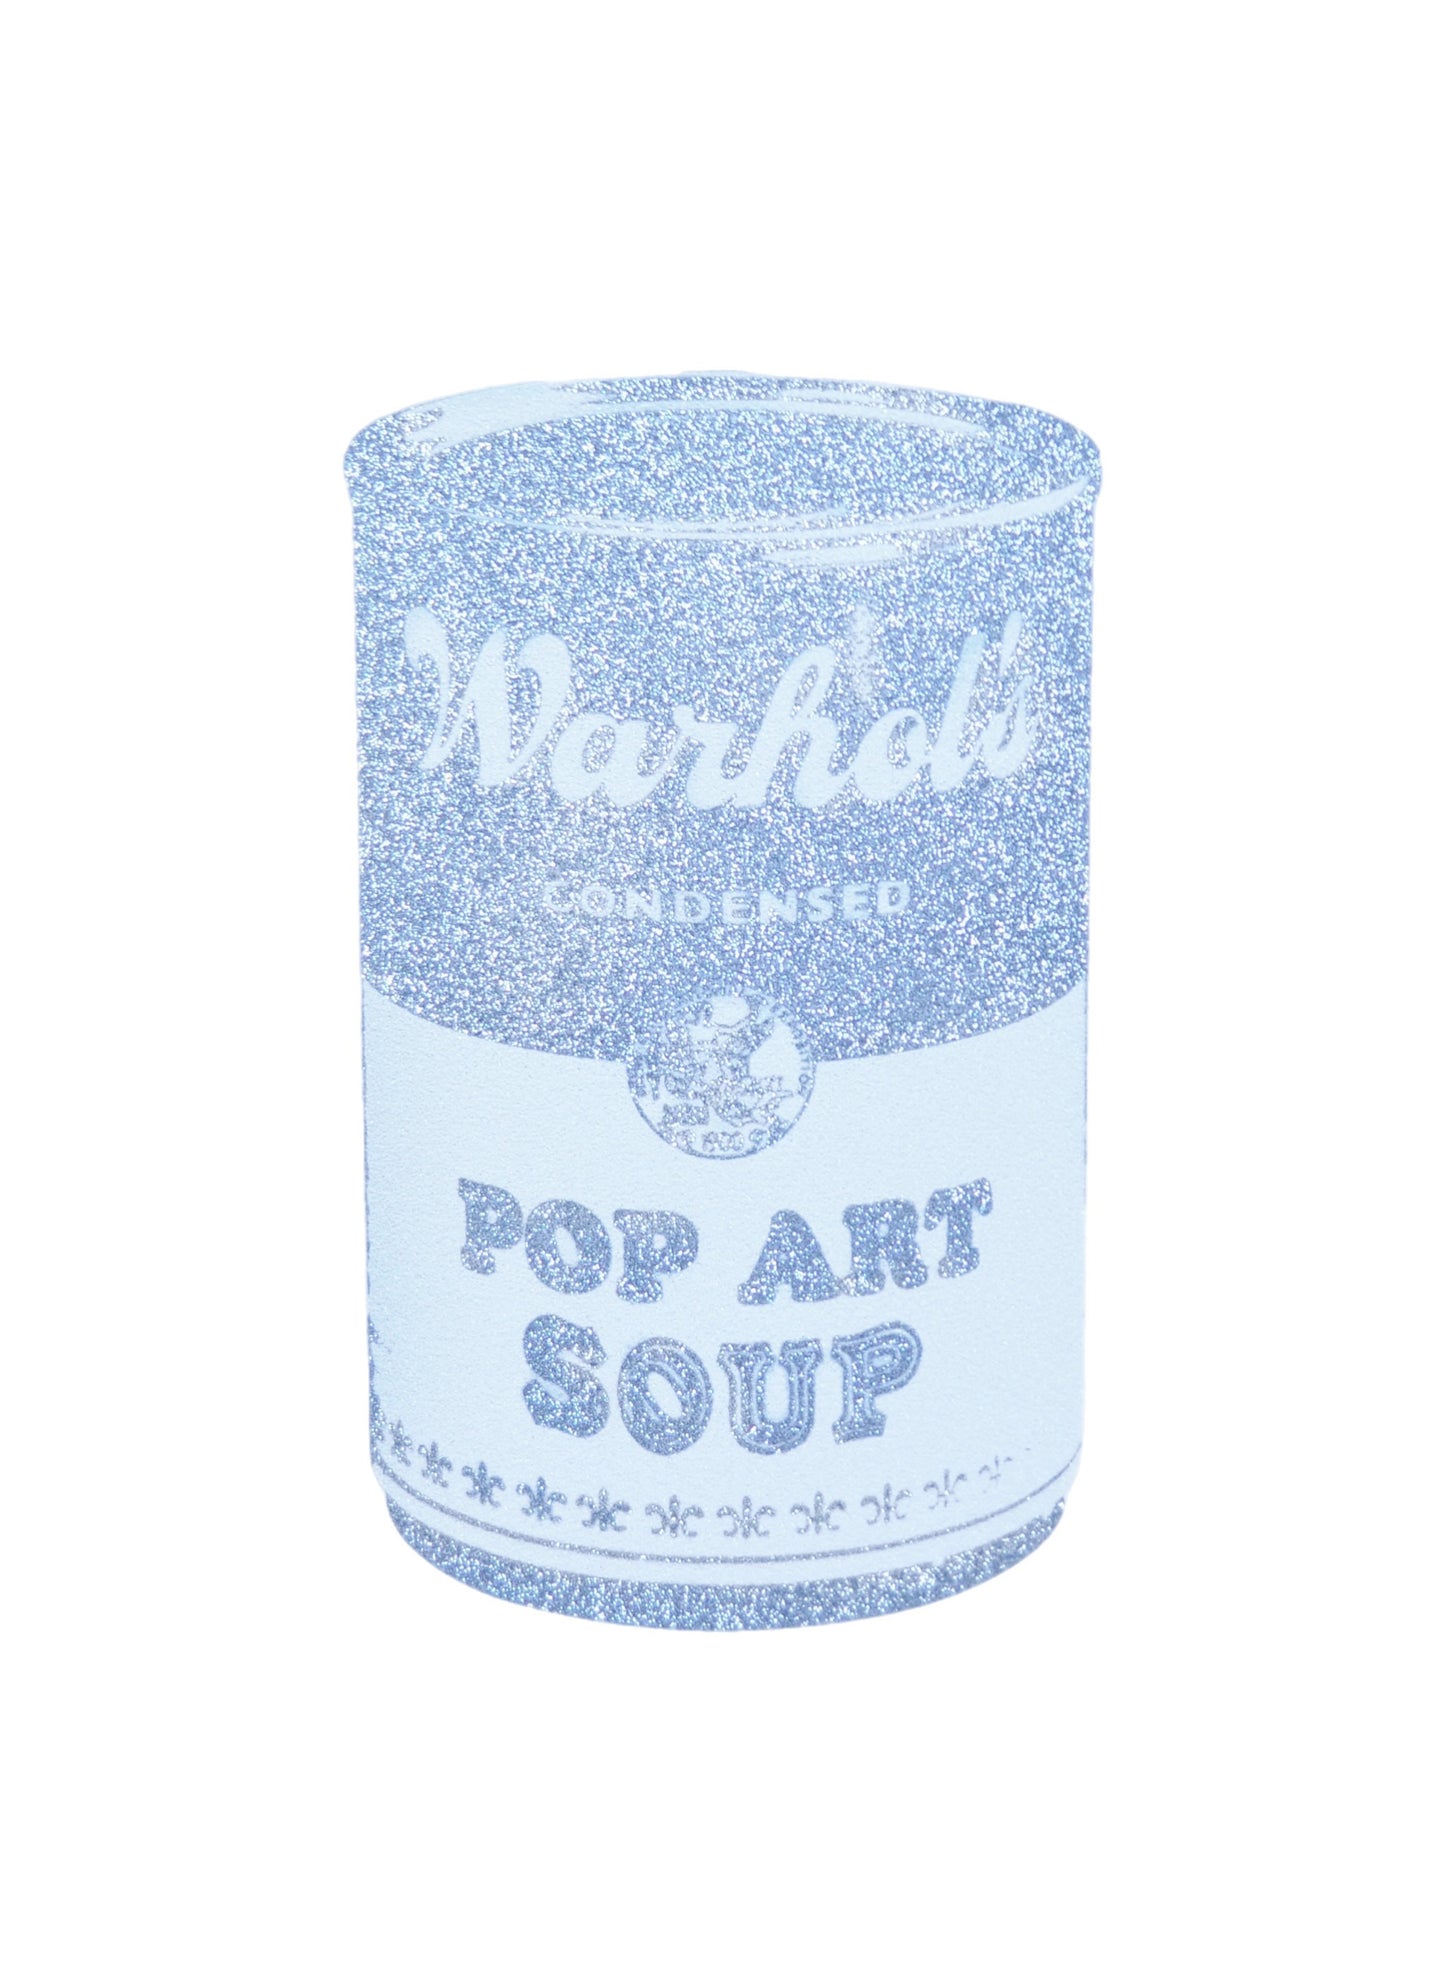 Pop Art Soup, 2013, Silver